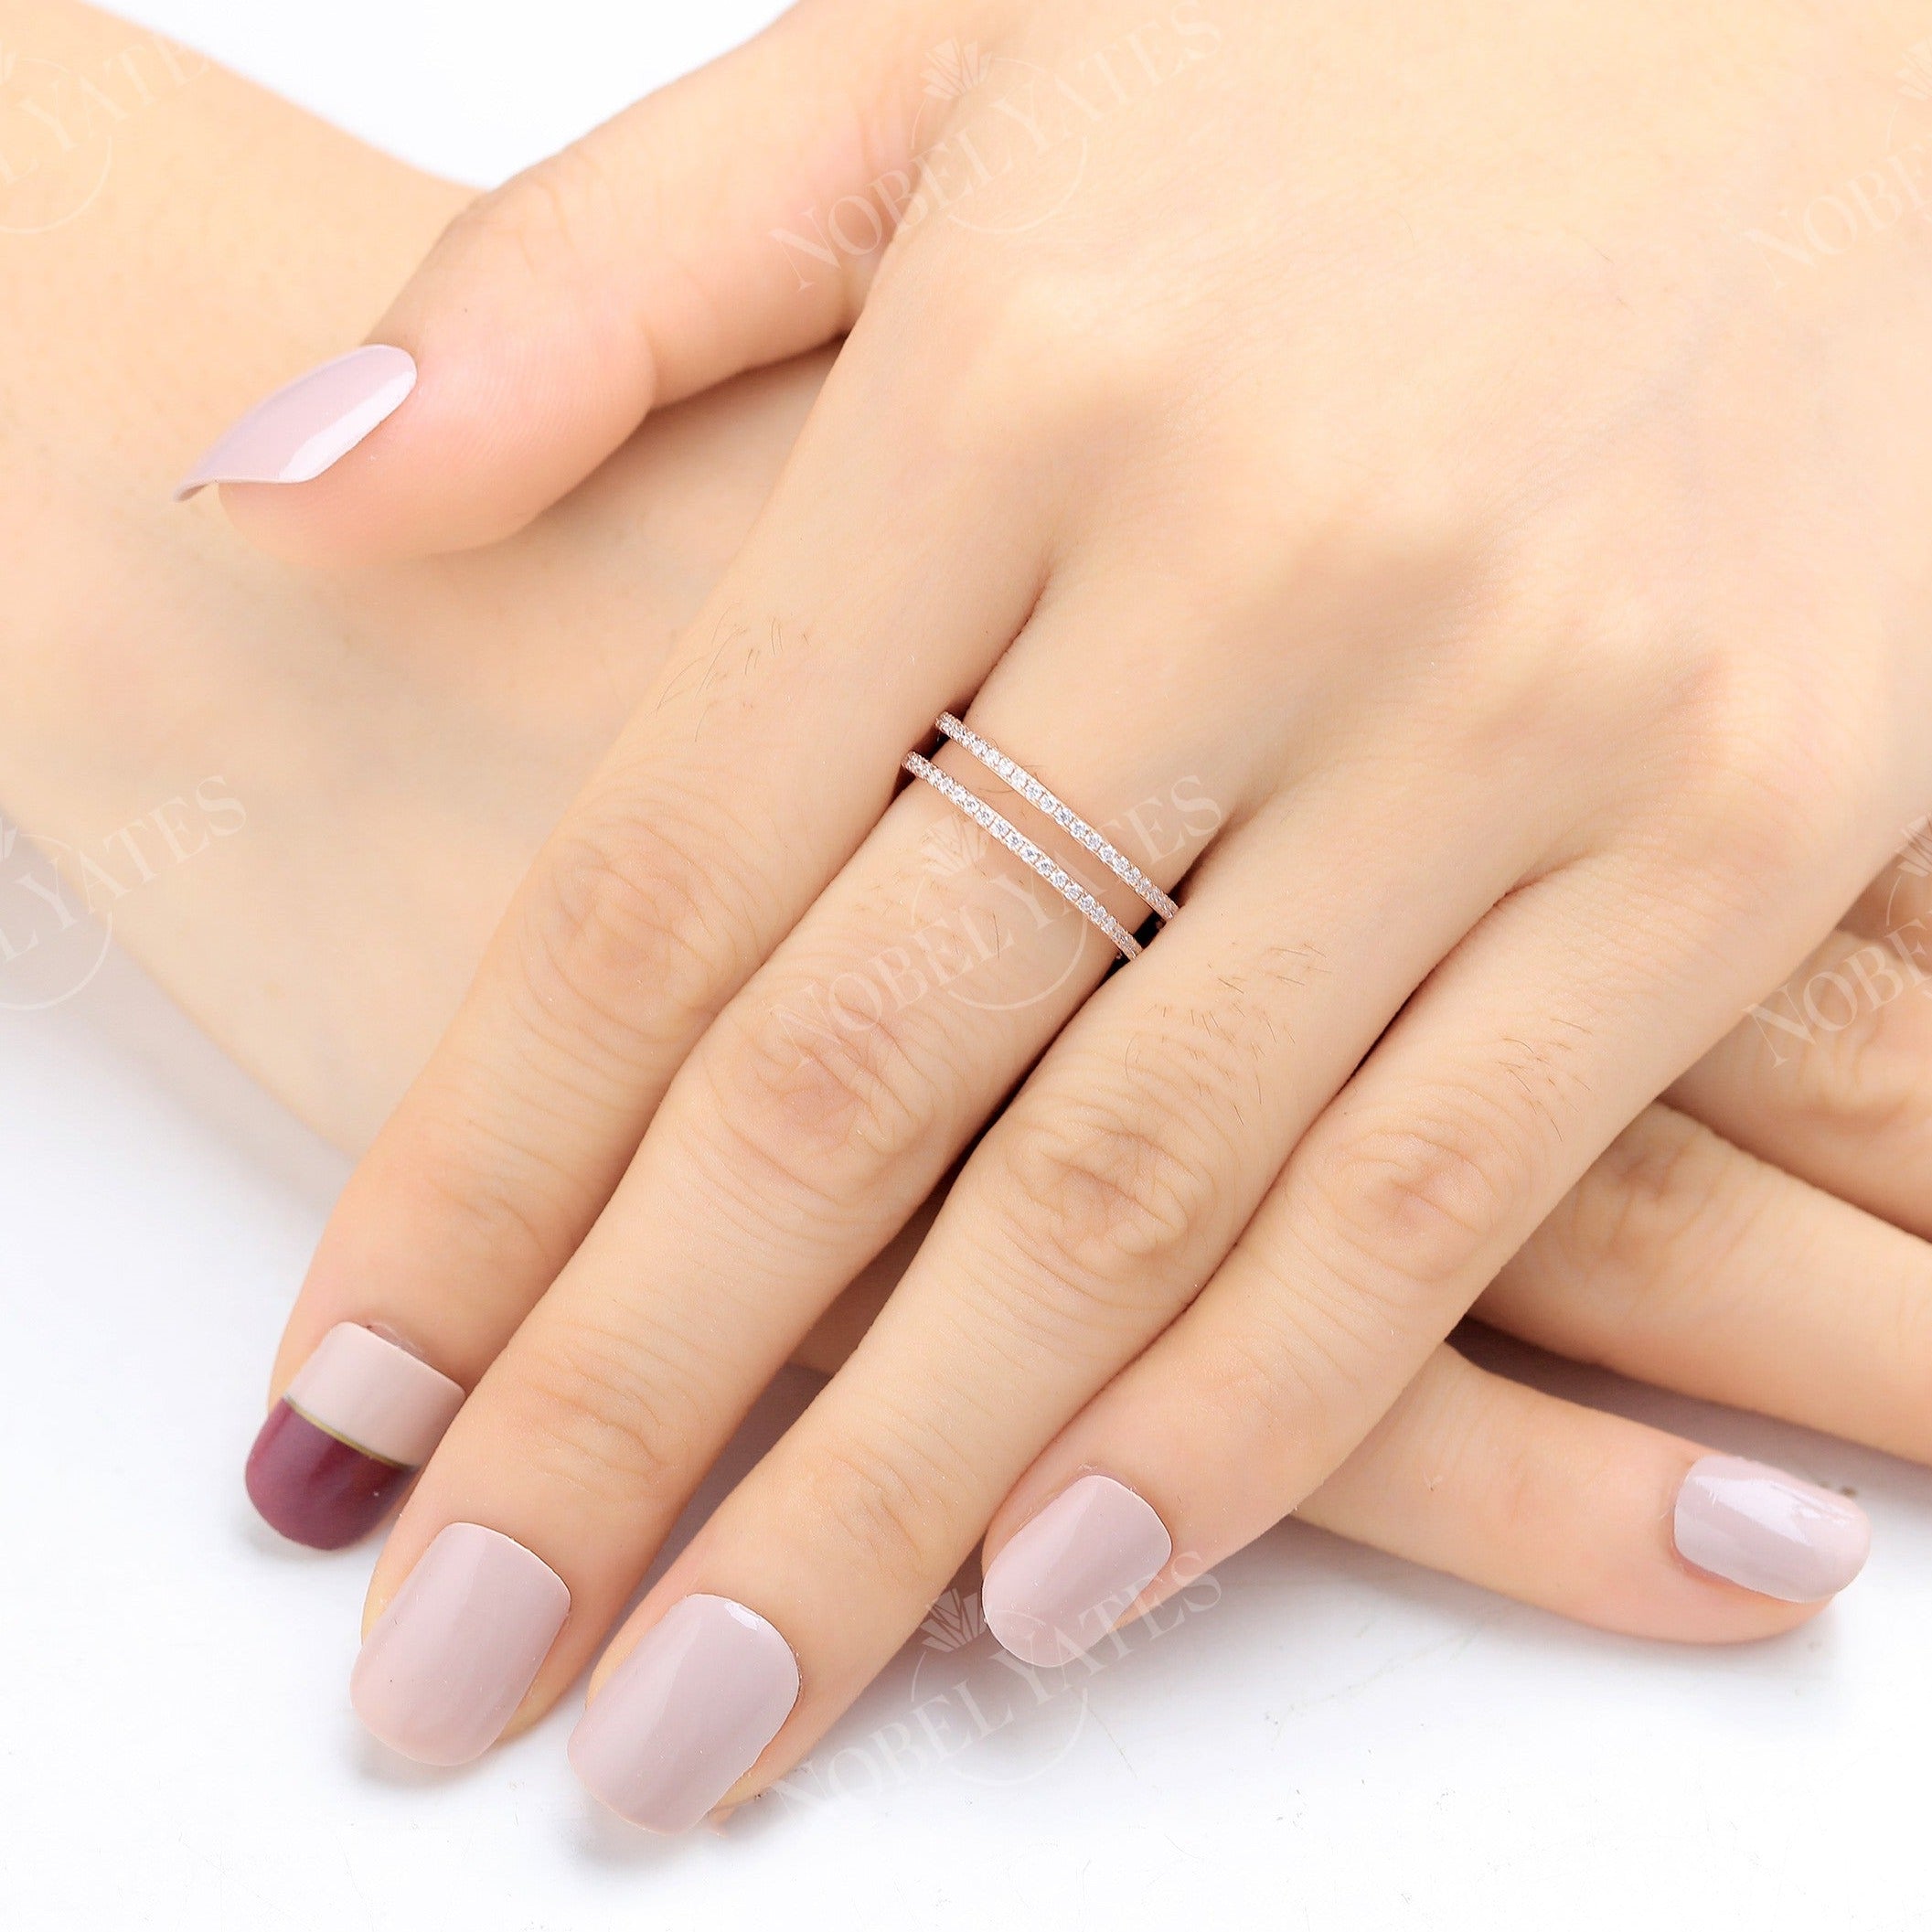 Moissanite engagement ring set, crown shape rings with diamonds / Ariadne |  Eden Garden Jewelry™